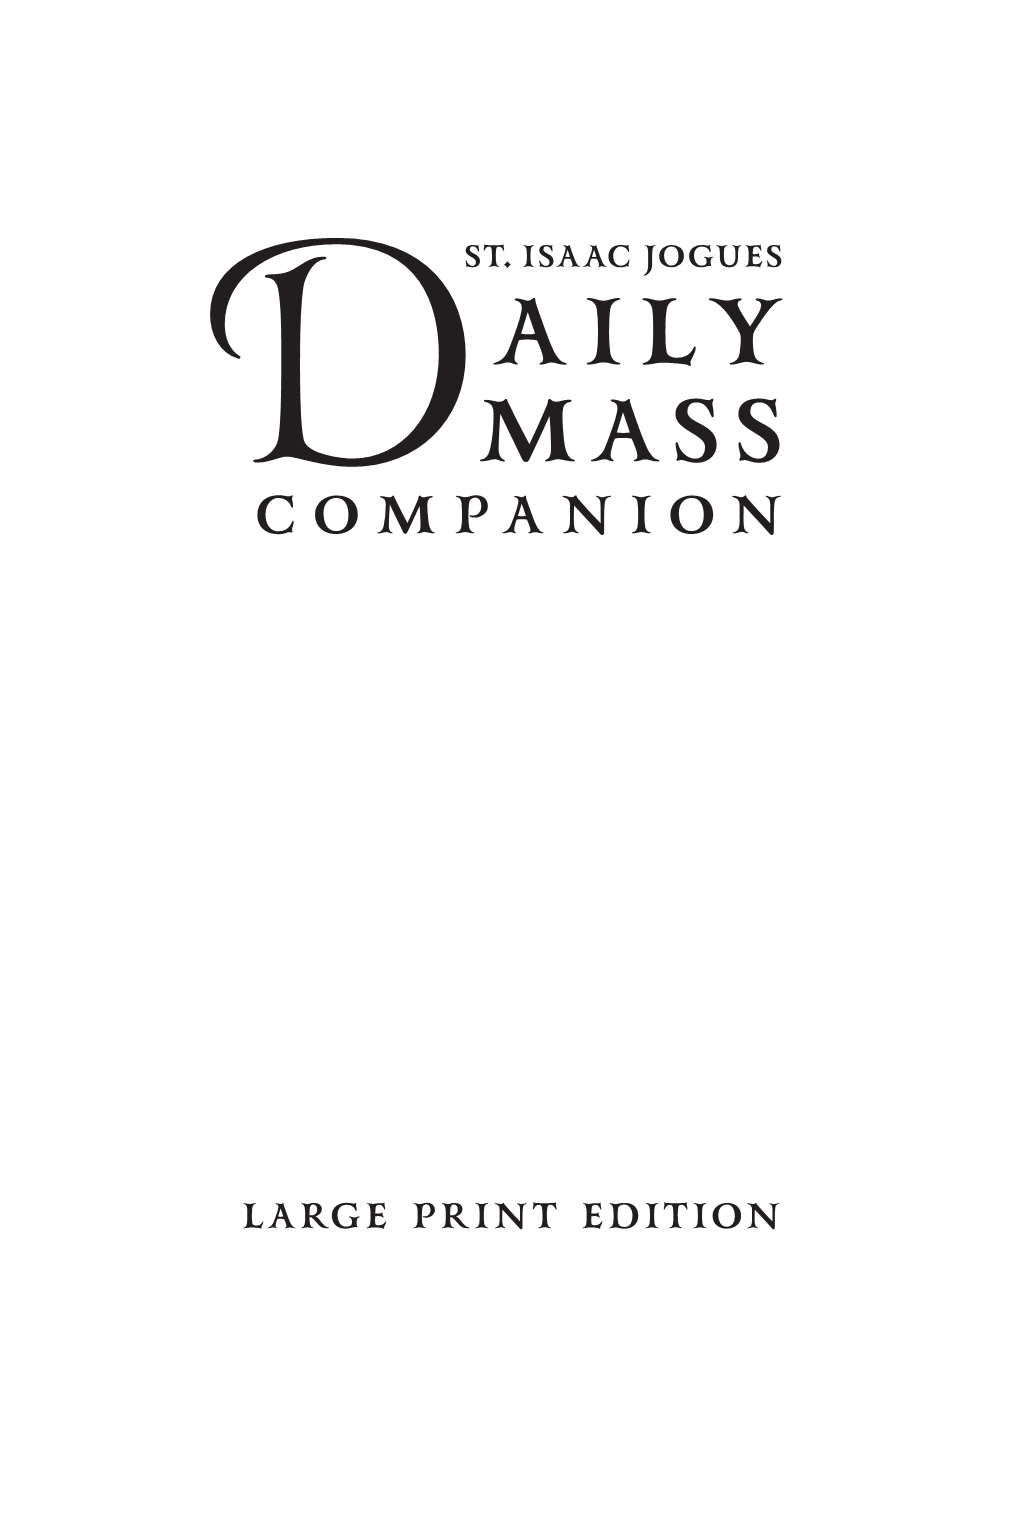 This Daily Mass Companion